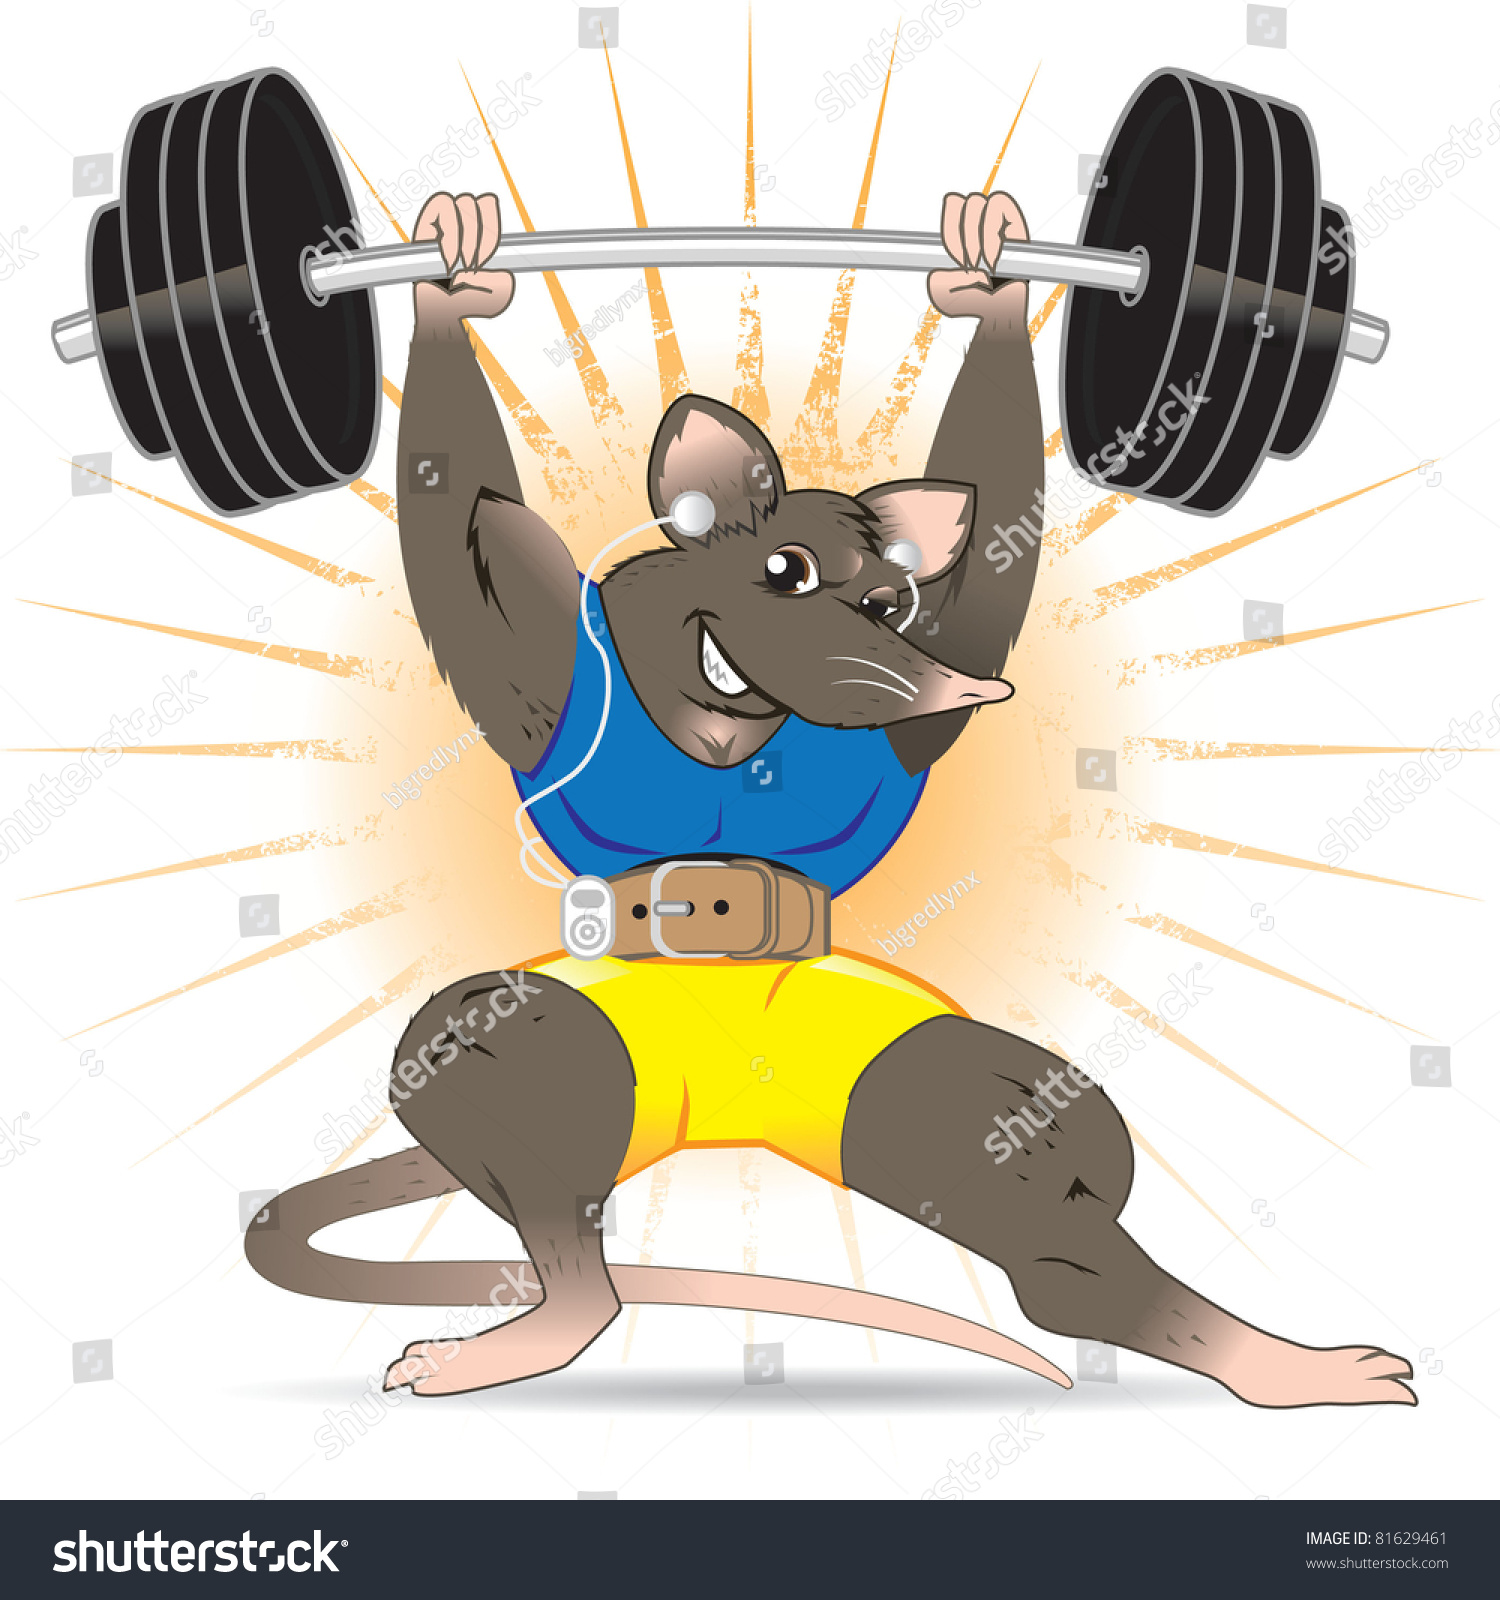 Gym Rat: vector de stock (libre de regalías) 81629461 Shutterstock.